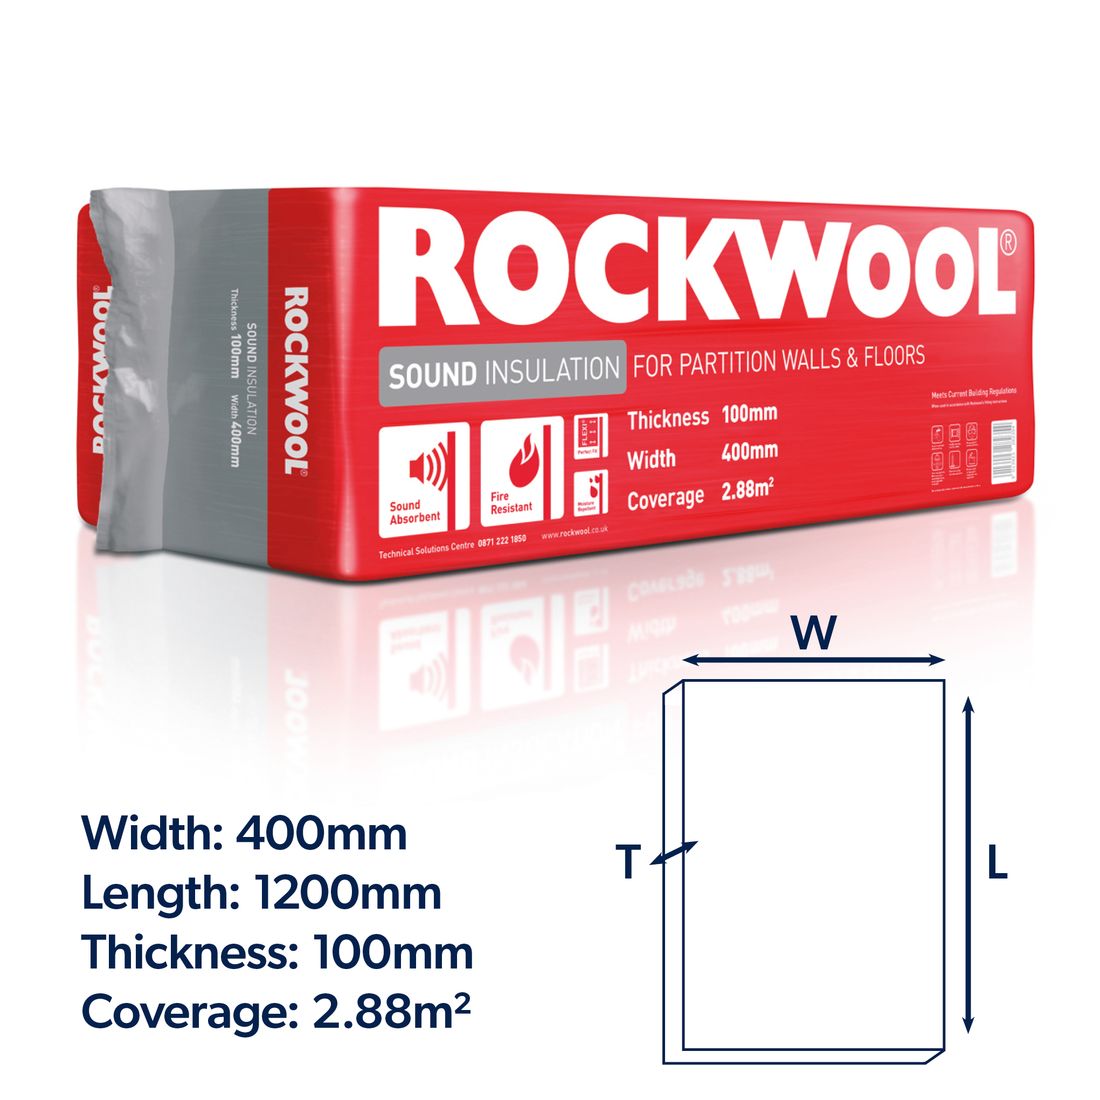 Rockwool Sound Insulation Slab 1200 X 400 X 100Mm Pk6 2.88M2